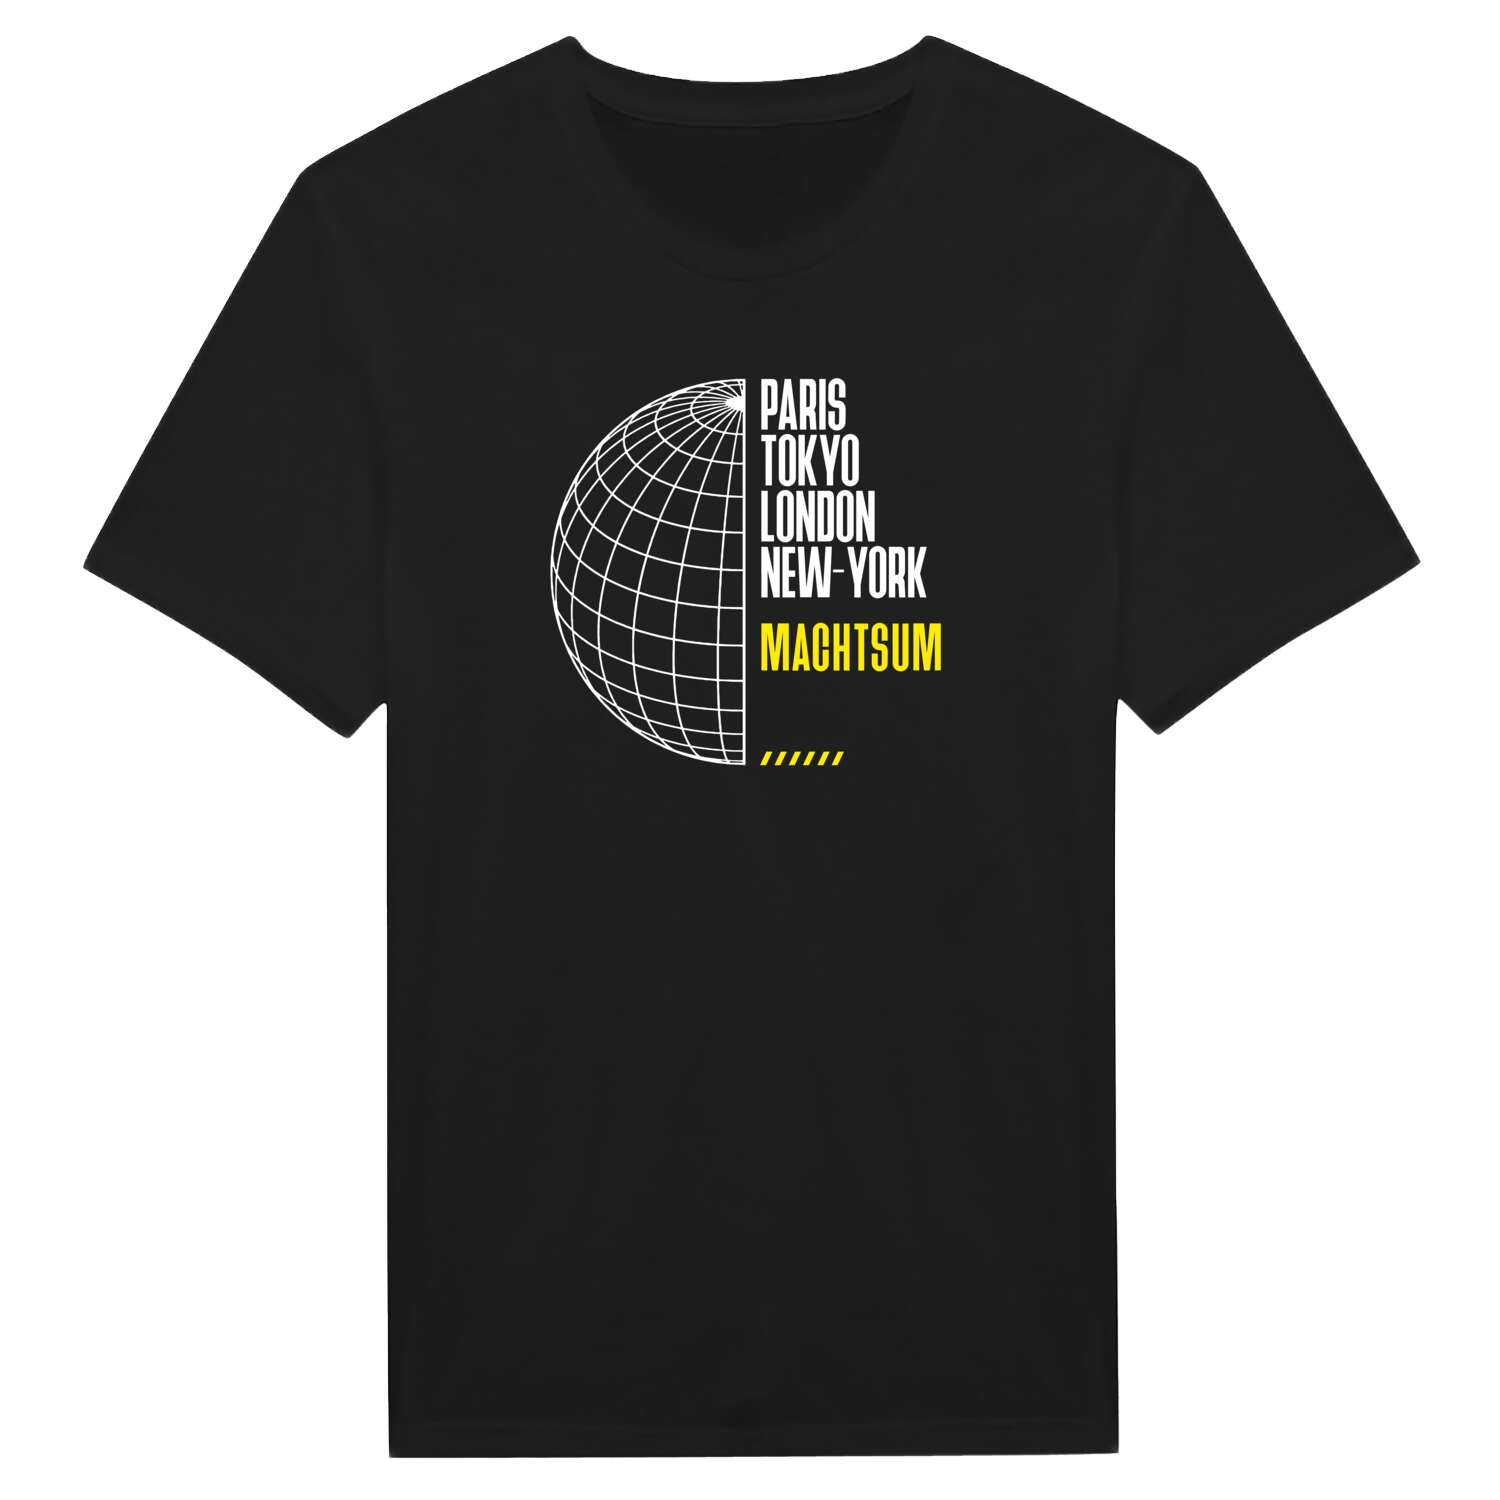 Machtsum T-Shirt »Paris Tokyo London«